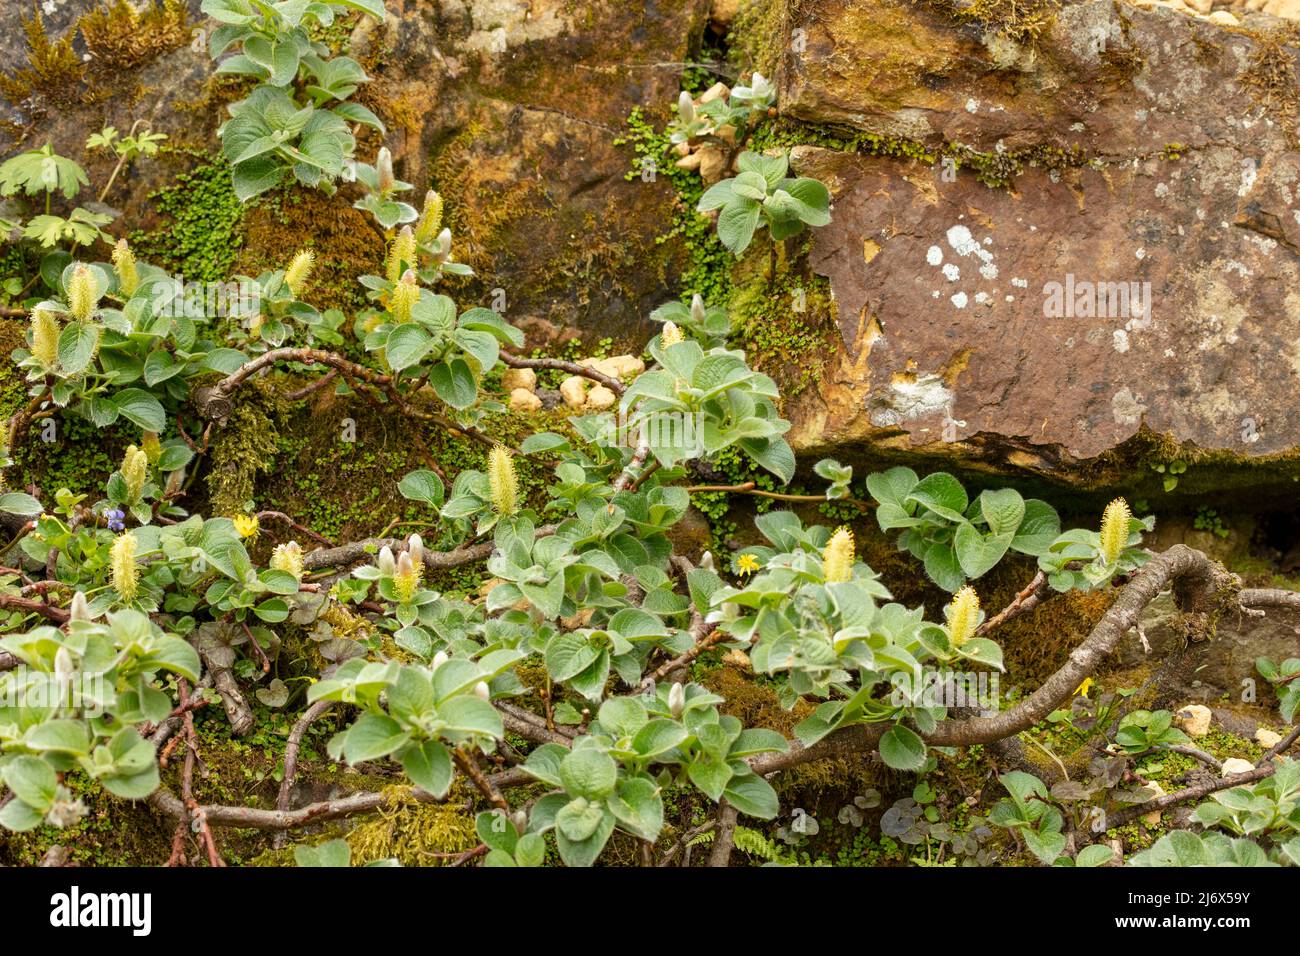 Tight close-up plant portrait of Salix nakamurana var. yezoalpina, creeping alpine willow, against stone Stock Photo